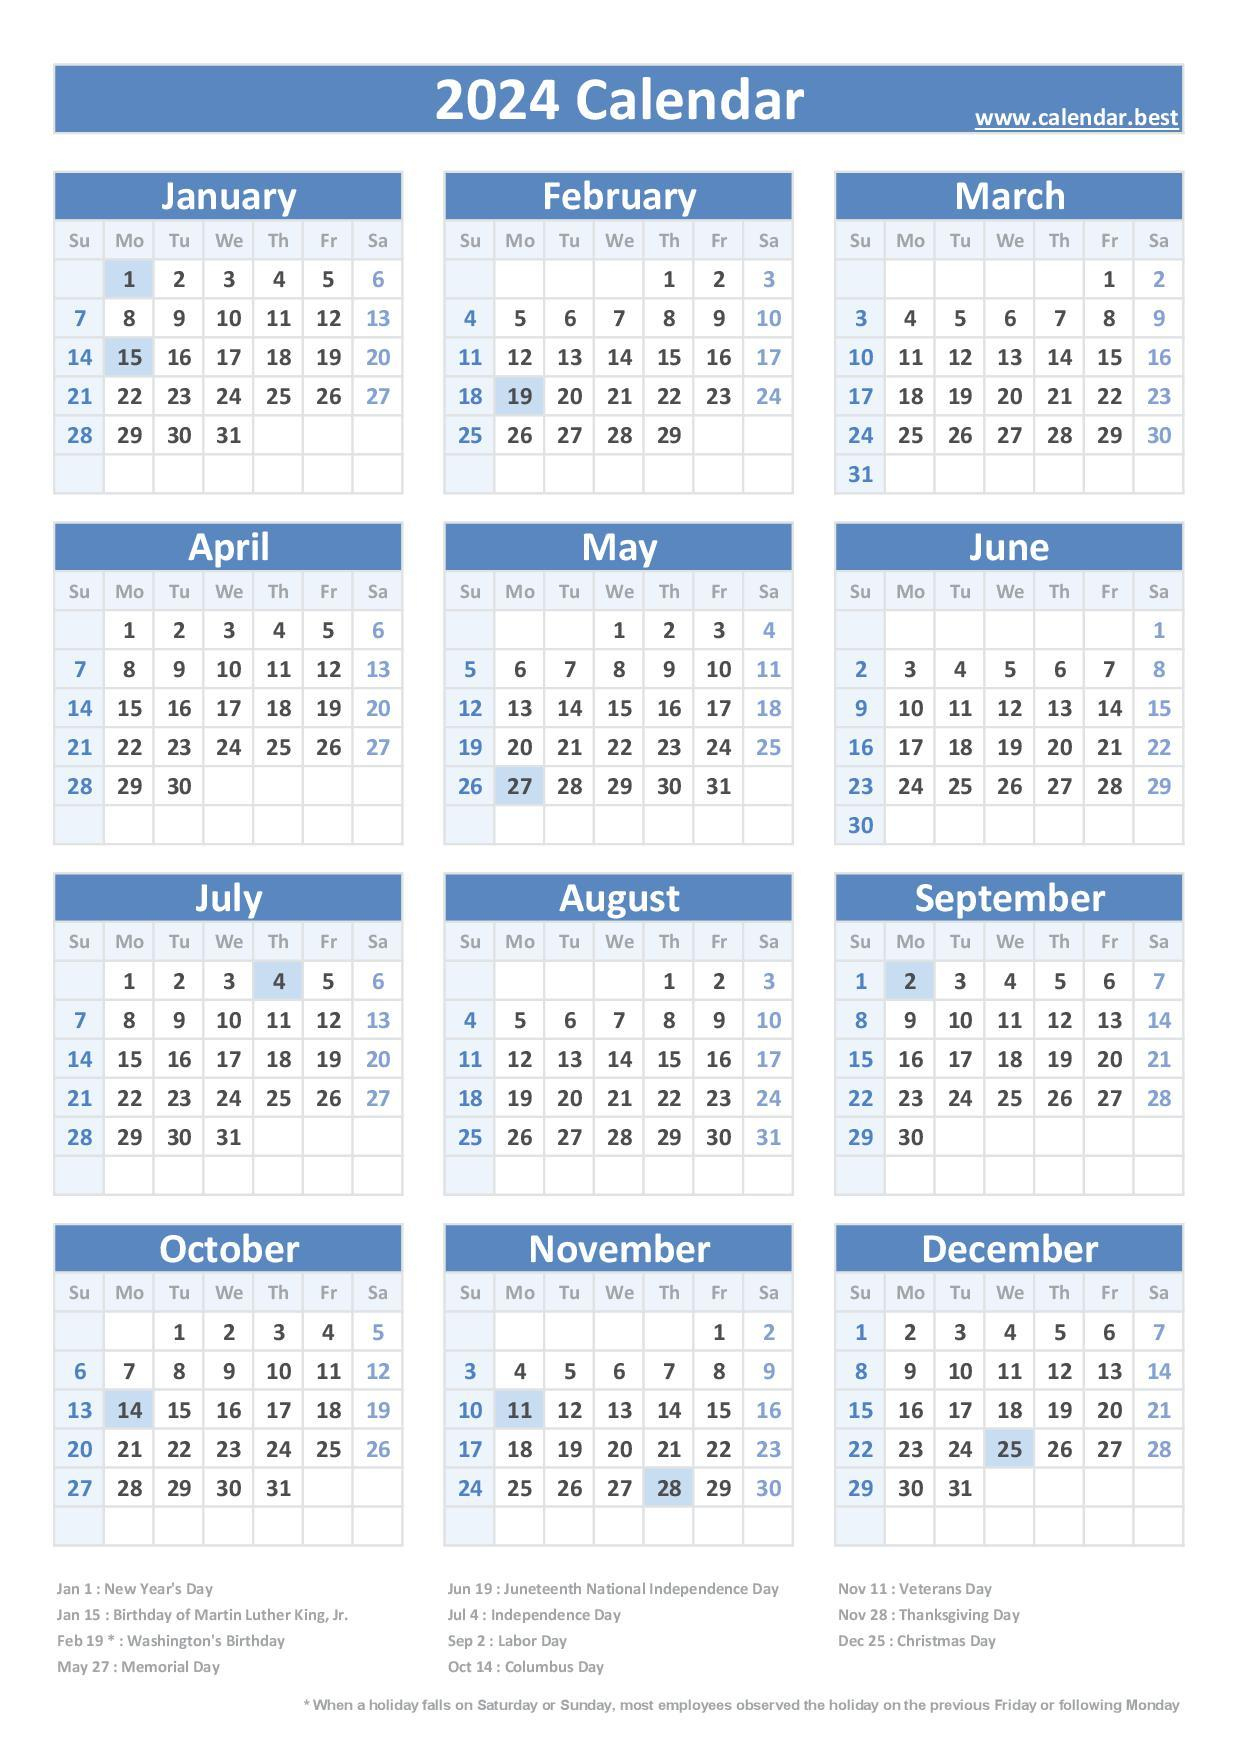 2024 Calendar With Holidays (Us Federal Holidays) | Printable Calendar 2024 With Federal Holidays